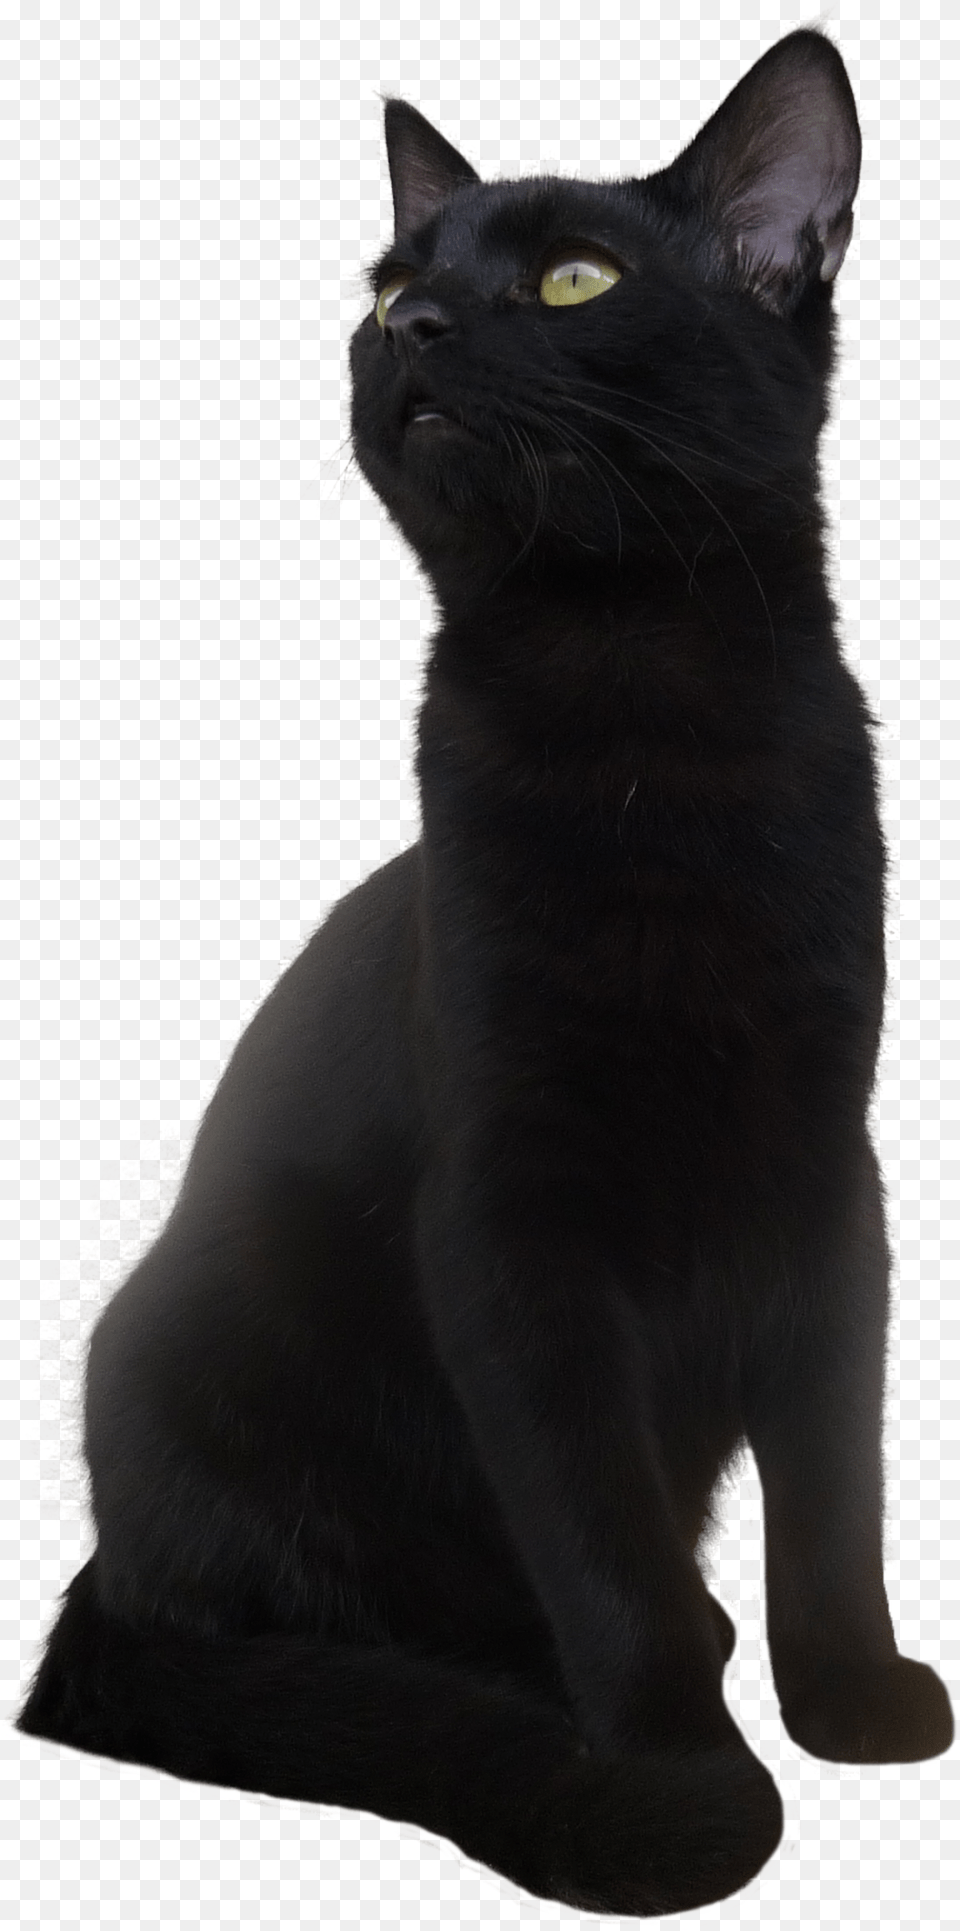 Black Cat Transparent Picture Short Hair Black Cat, Animal, Mammal, Pet, Black Cat Png Image